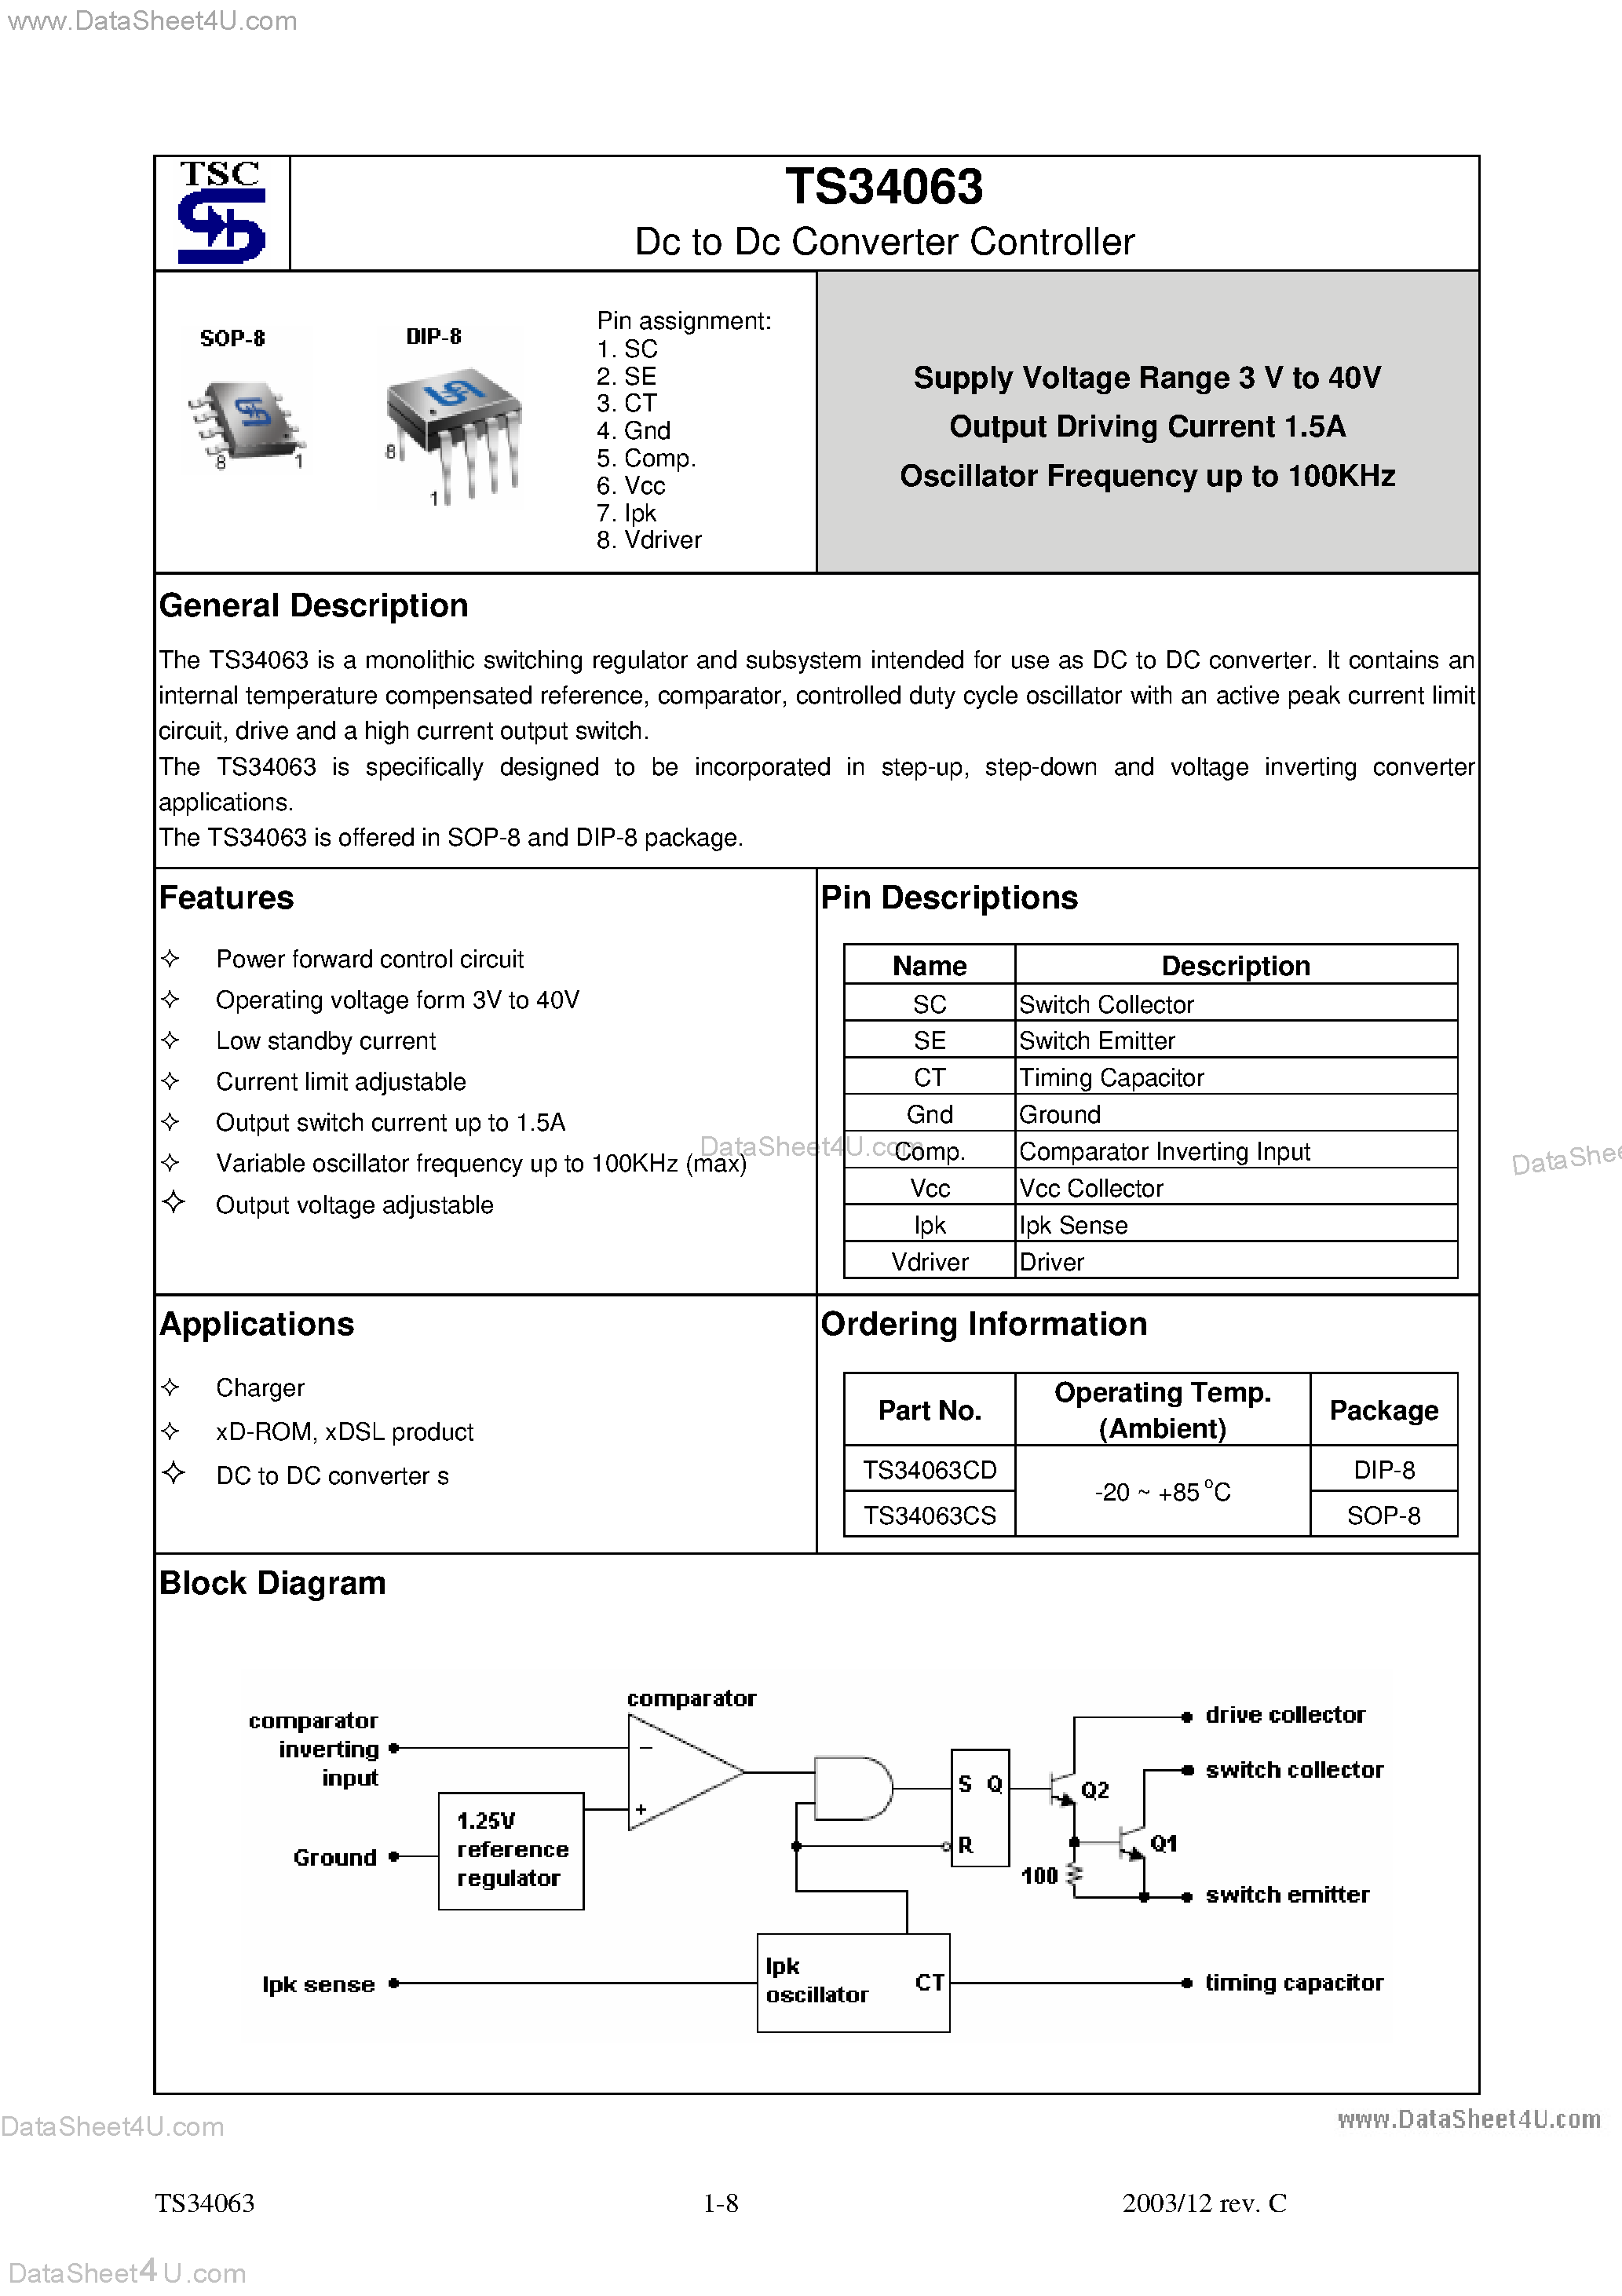 Даташит TS34063 - Dc to Dc Converter Controller страница 1